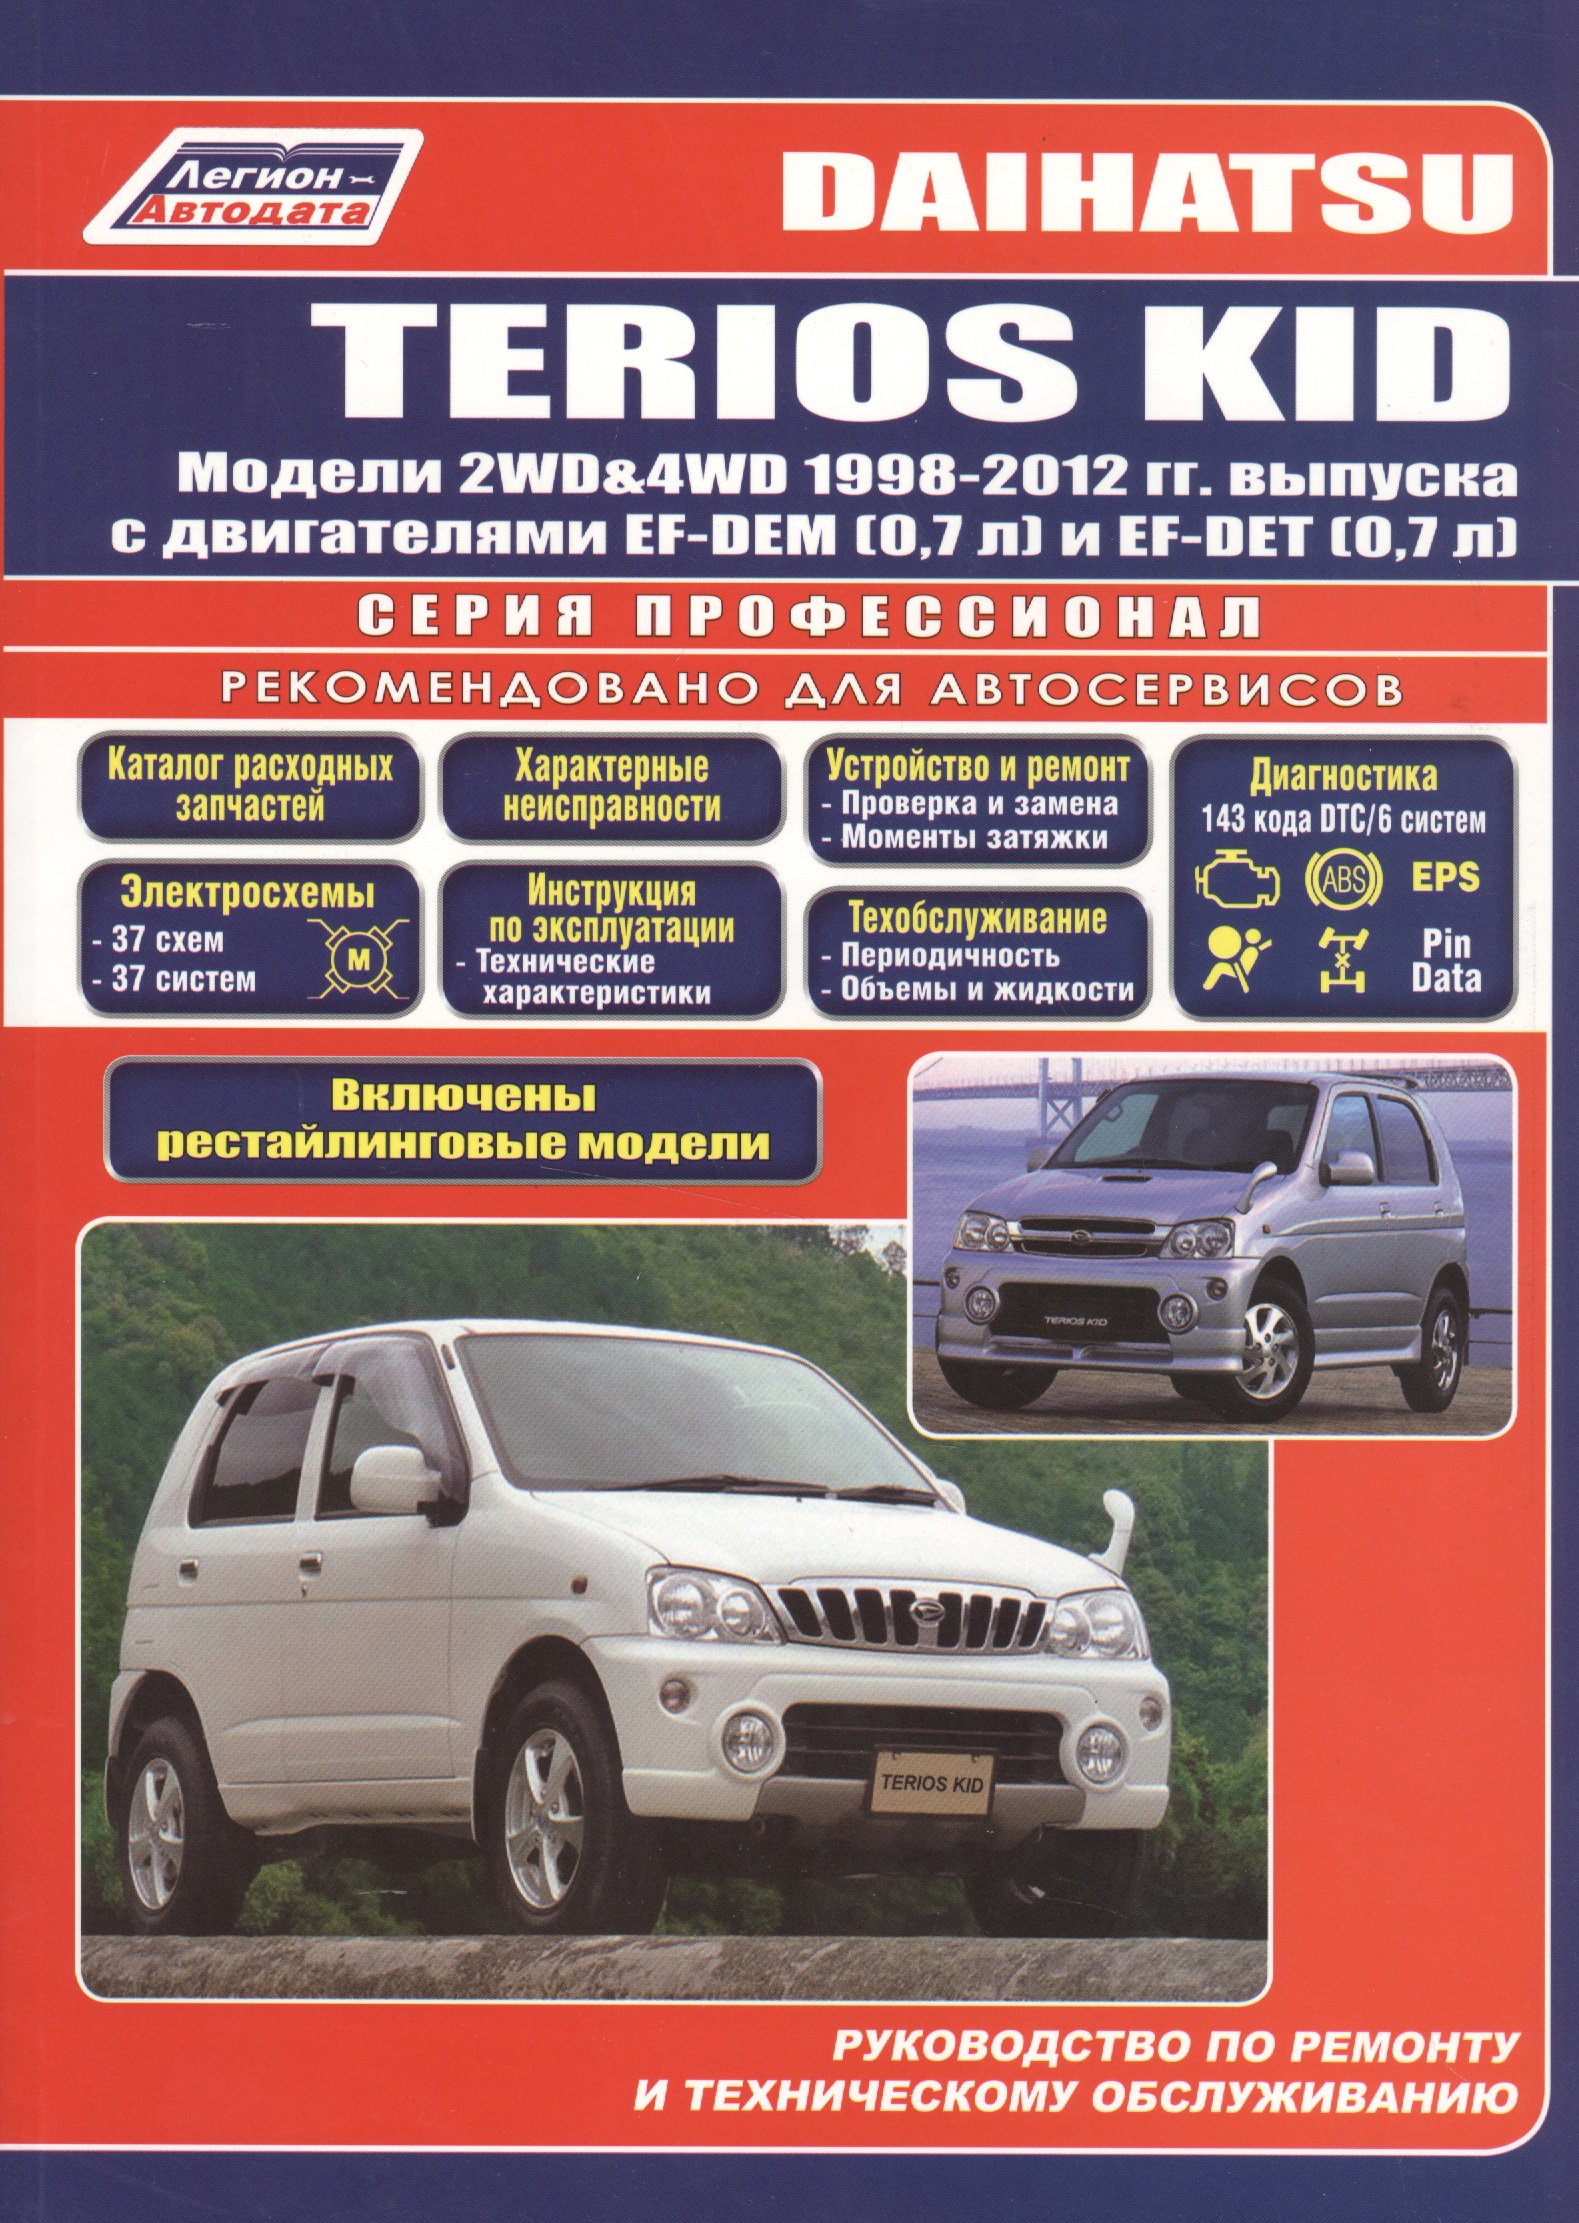 Daihatsu TERIOS KID Мод. 2WD&4WD 1998-2012 гг. вып. с бенз. двиг. (мПрофессионал)